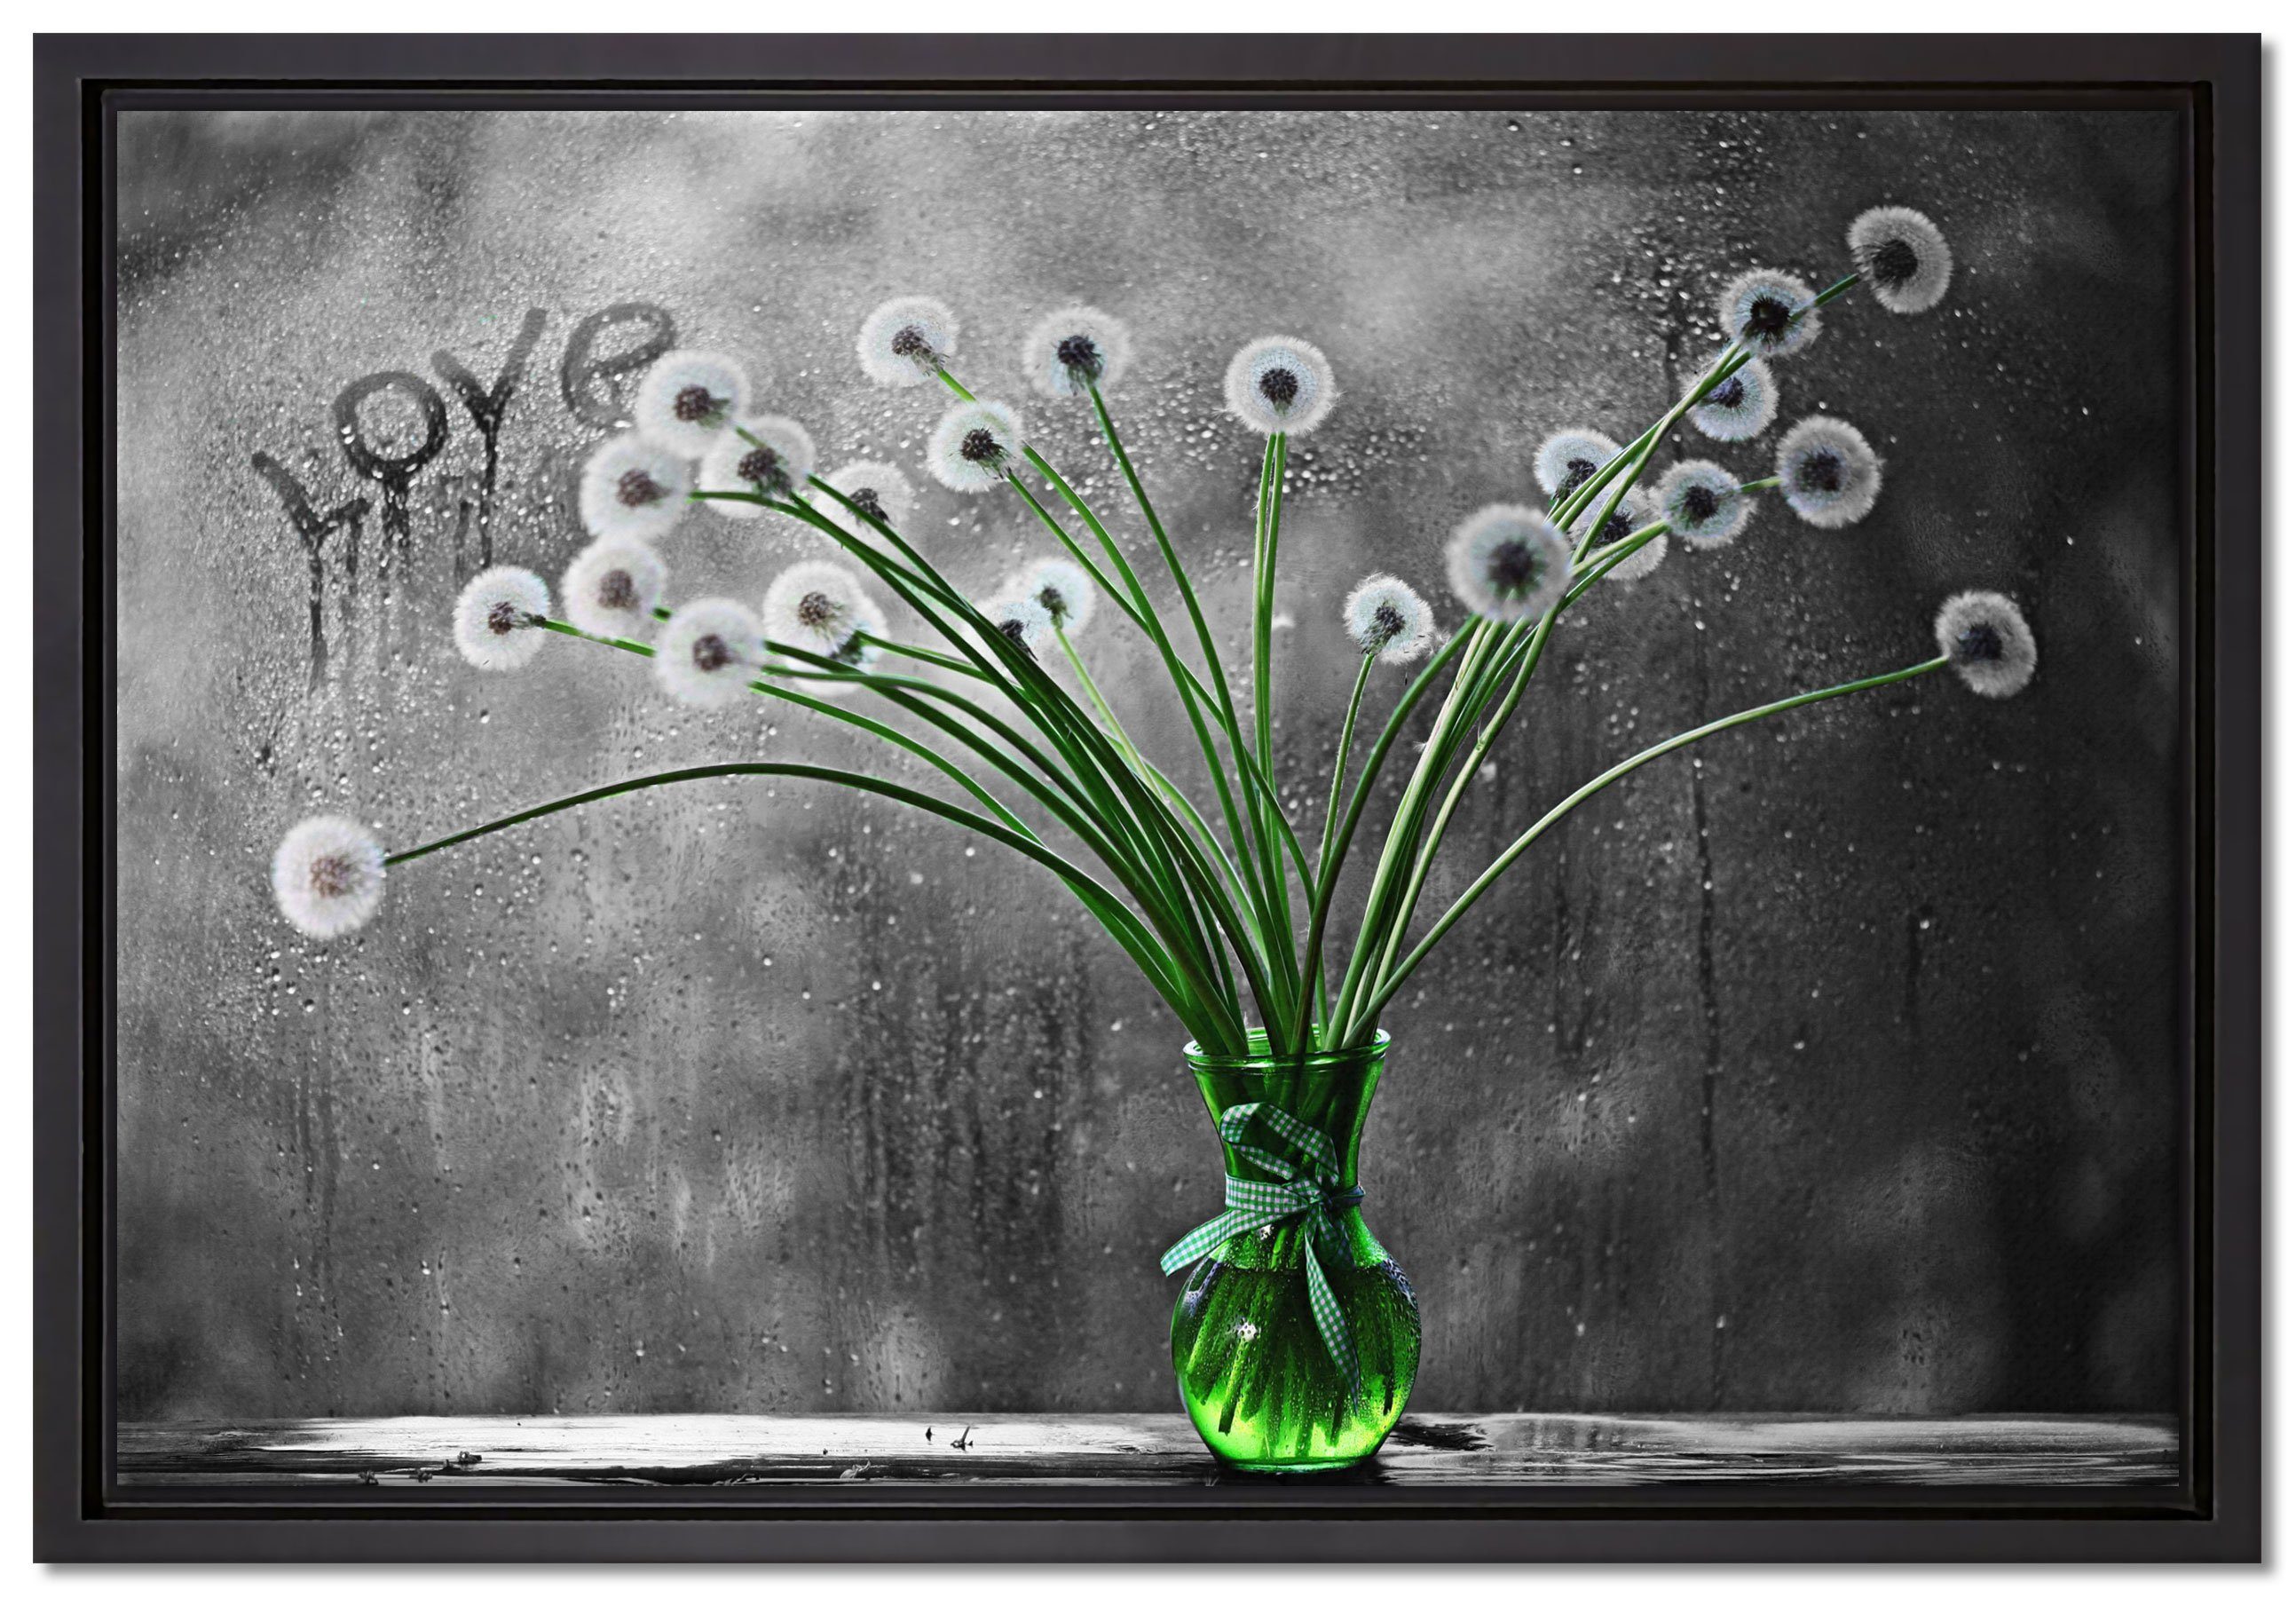 Pixxprint Leinwandbild Pusteblumen bei Regen, Wanddekoration (1 St), Leinwandbild fertig bespannt, in einem Schattenfugen-Bilderrahmen gefasst, inkl. Zackenaufhänger